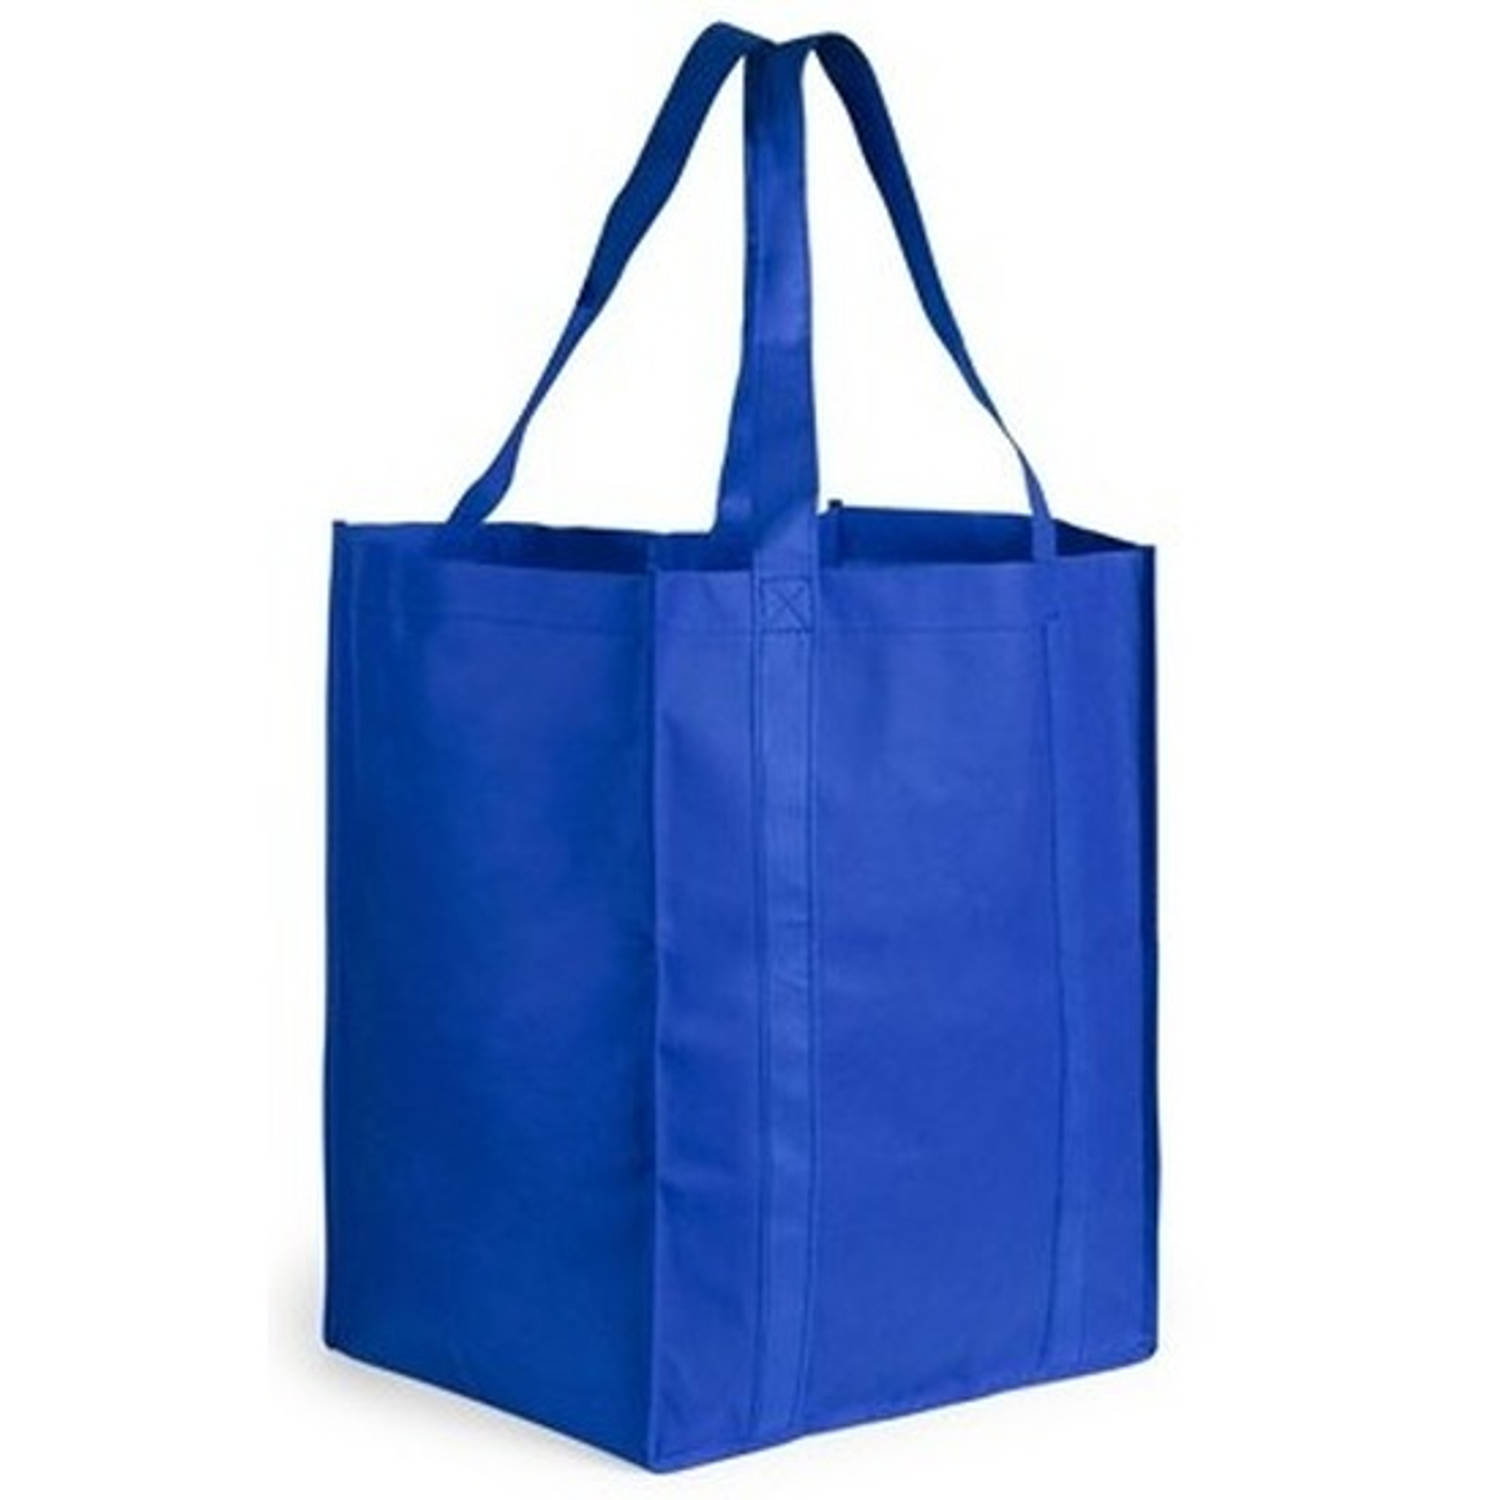 Boodschappen tas/shopper blauw 38 cm - Blokker